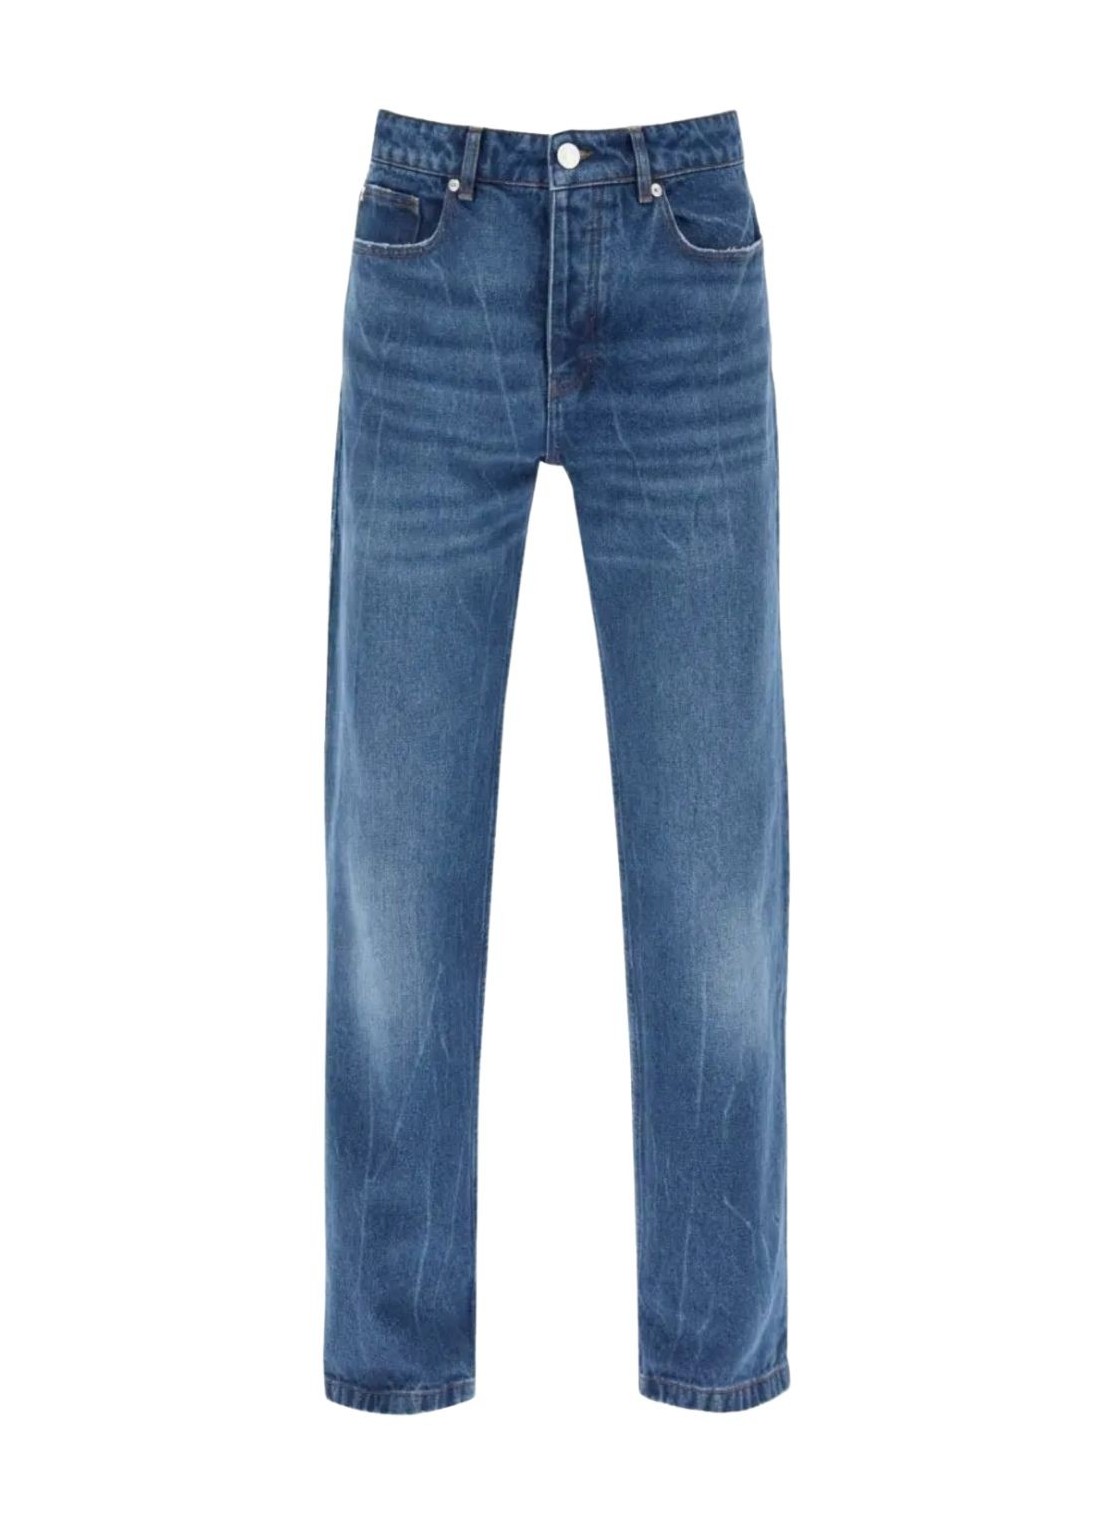 Pantalon jeans ami denim man classic fit jean htr001de0016 480 talla Azul
 